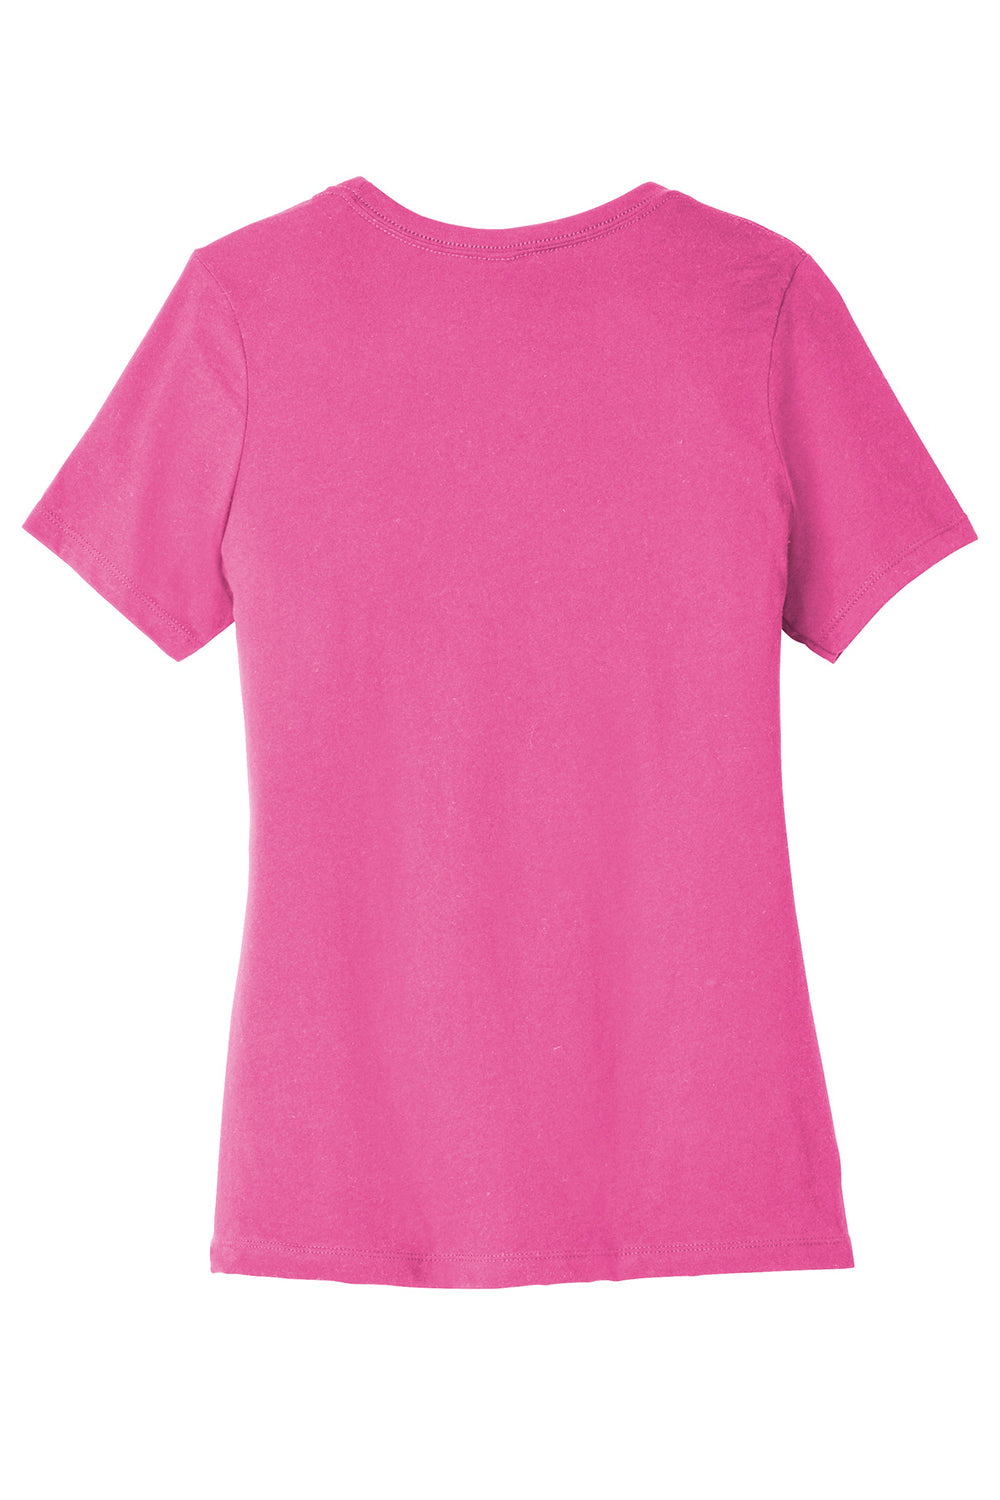 Bella + Canvas BC6400/B6400/6400 Womens Relaxed Jersey Short Sleeve Crewneck T-Shirt Charity Pink Flat Back